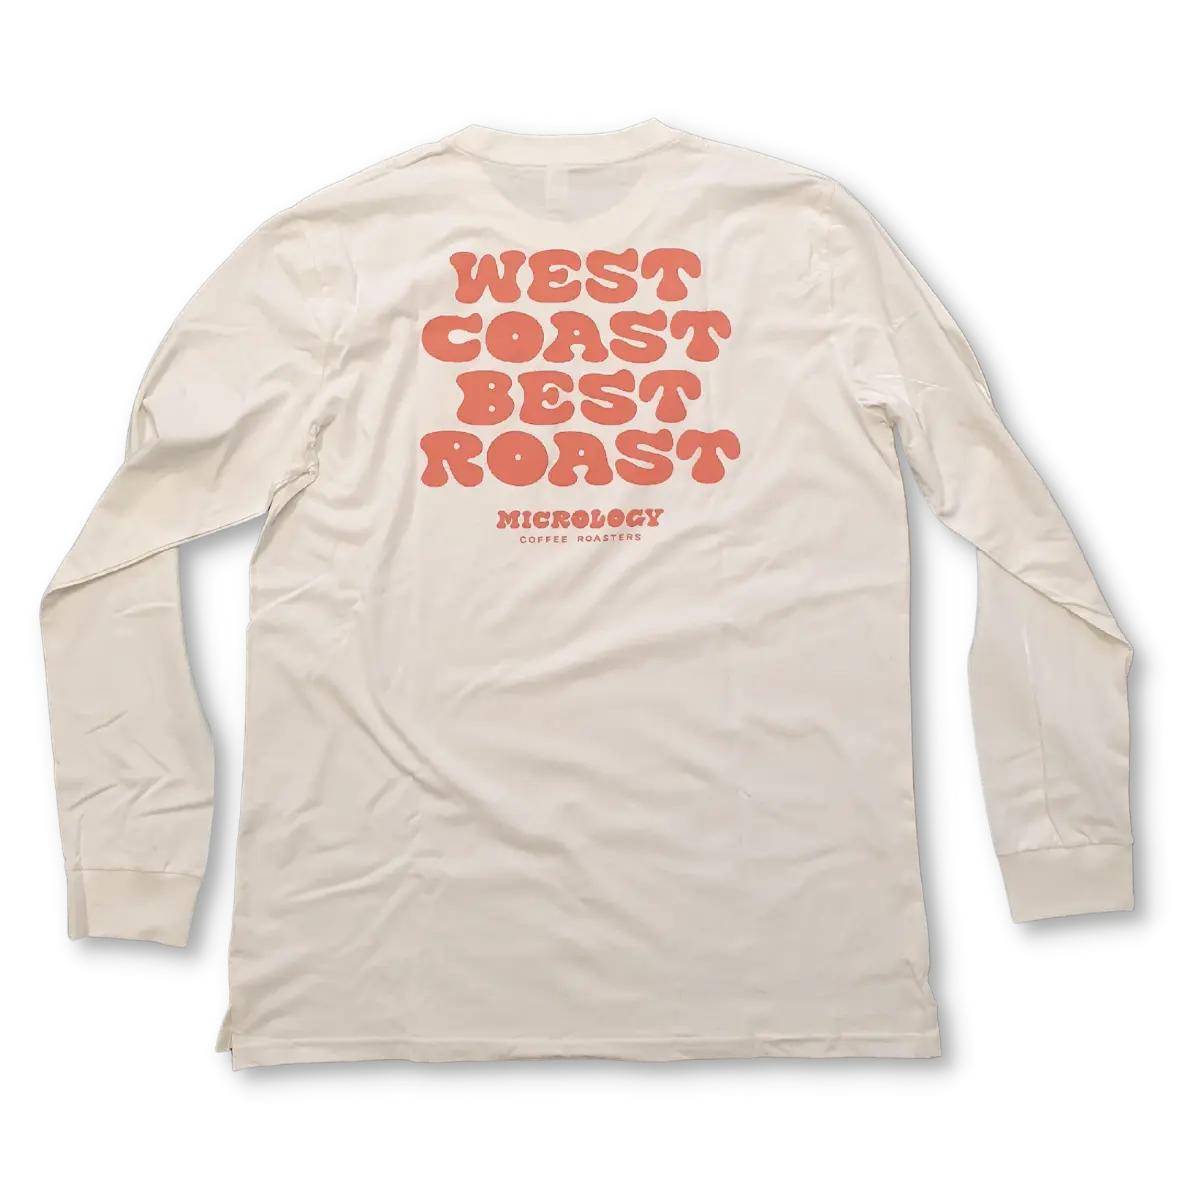 West Coast Best Roast Long Sleeve Shirt Micrology Coffee